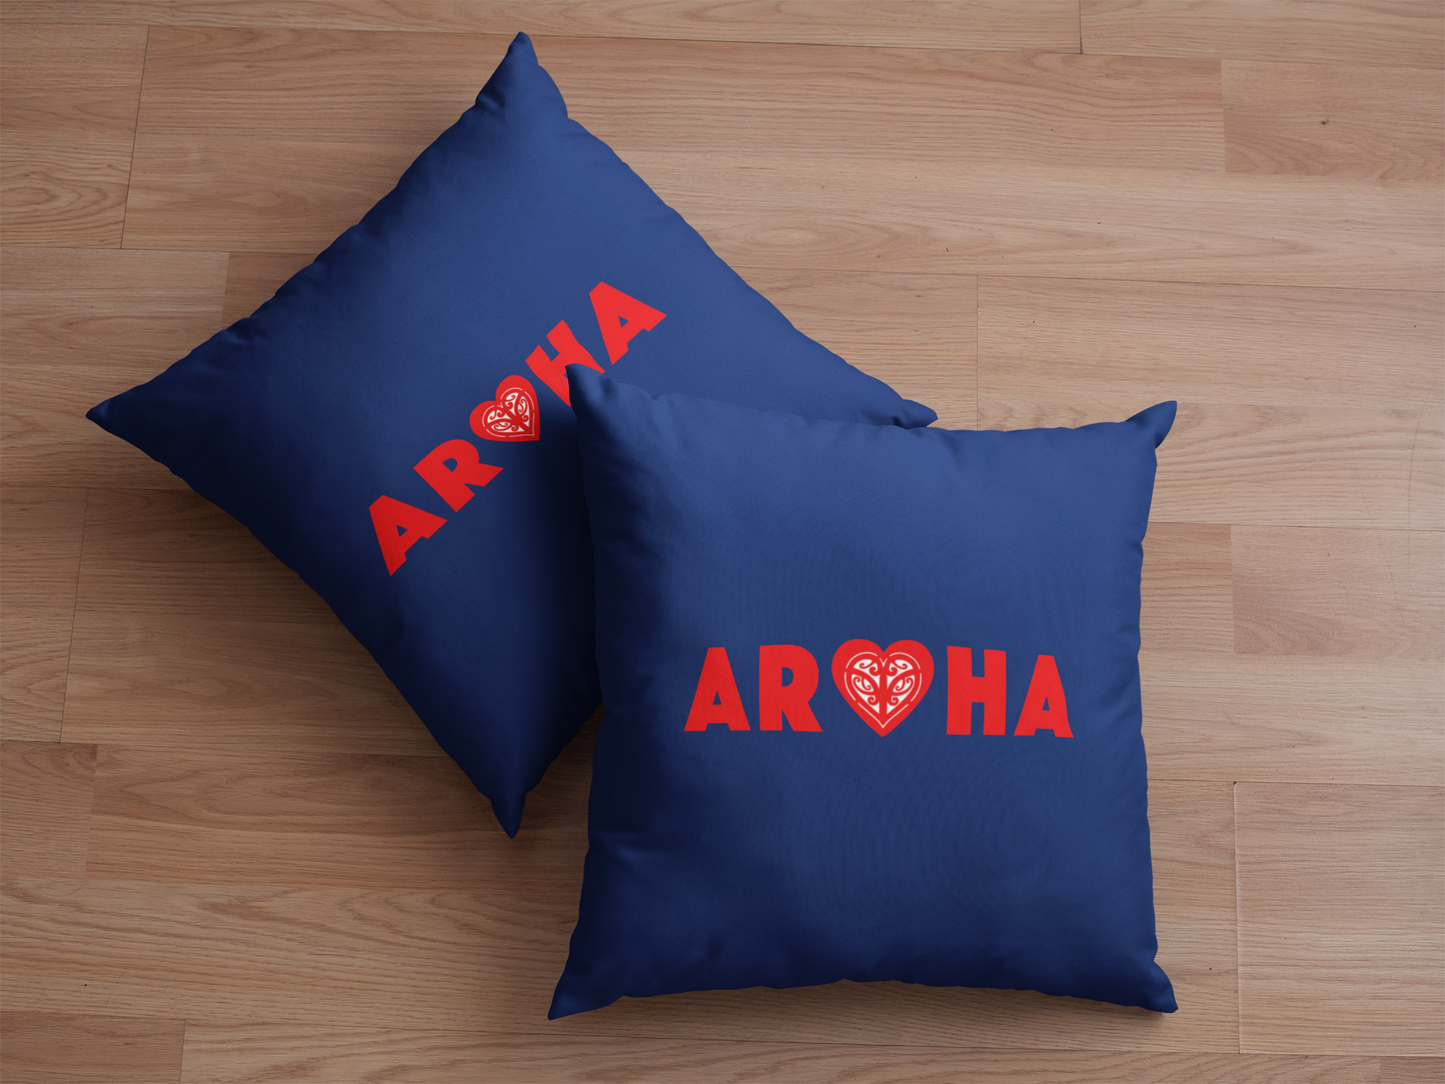 Cushion Cover - Simply Aroha